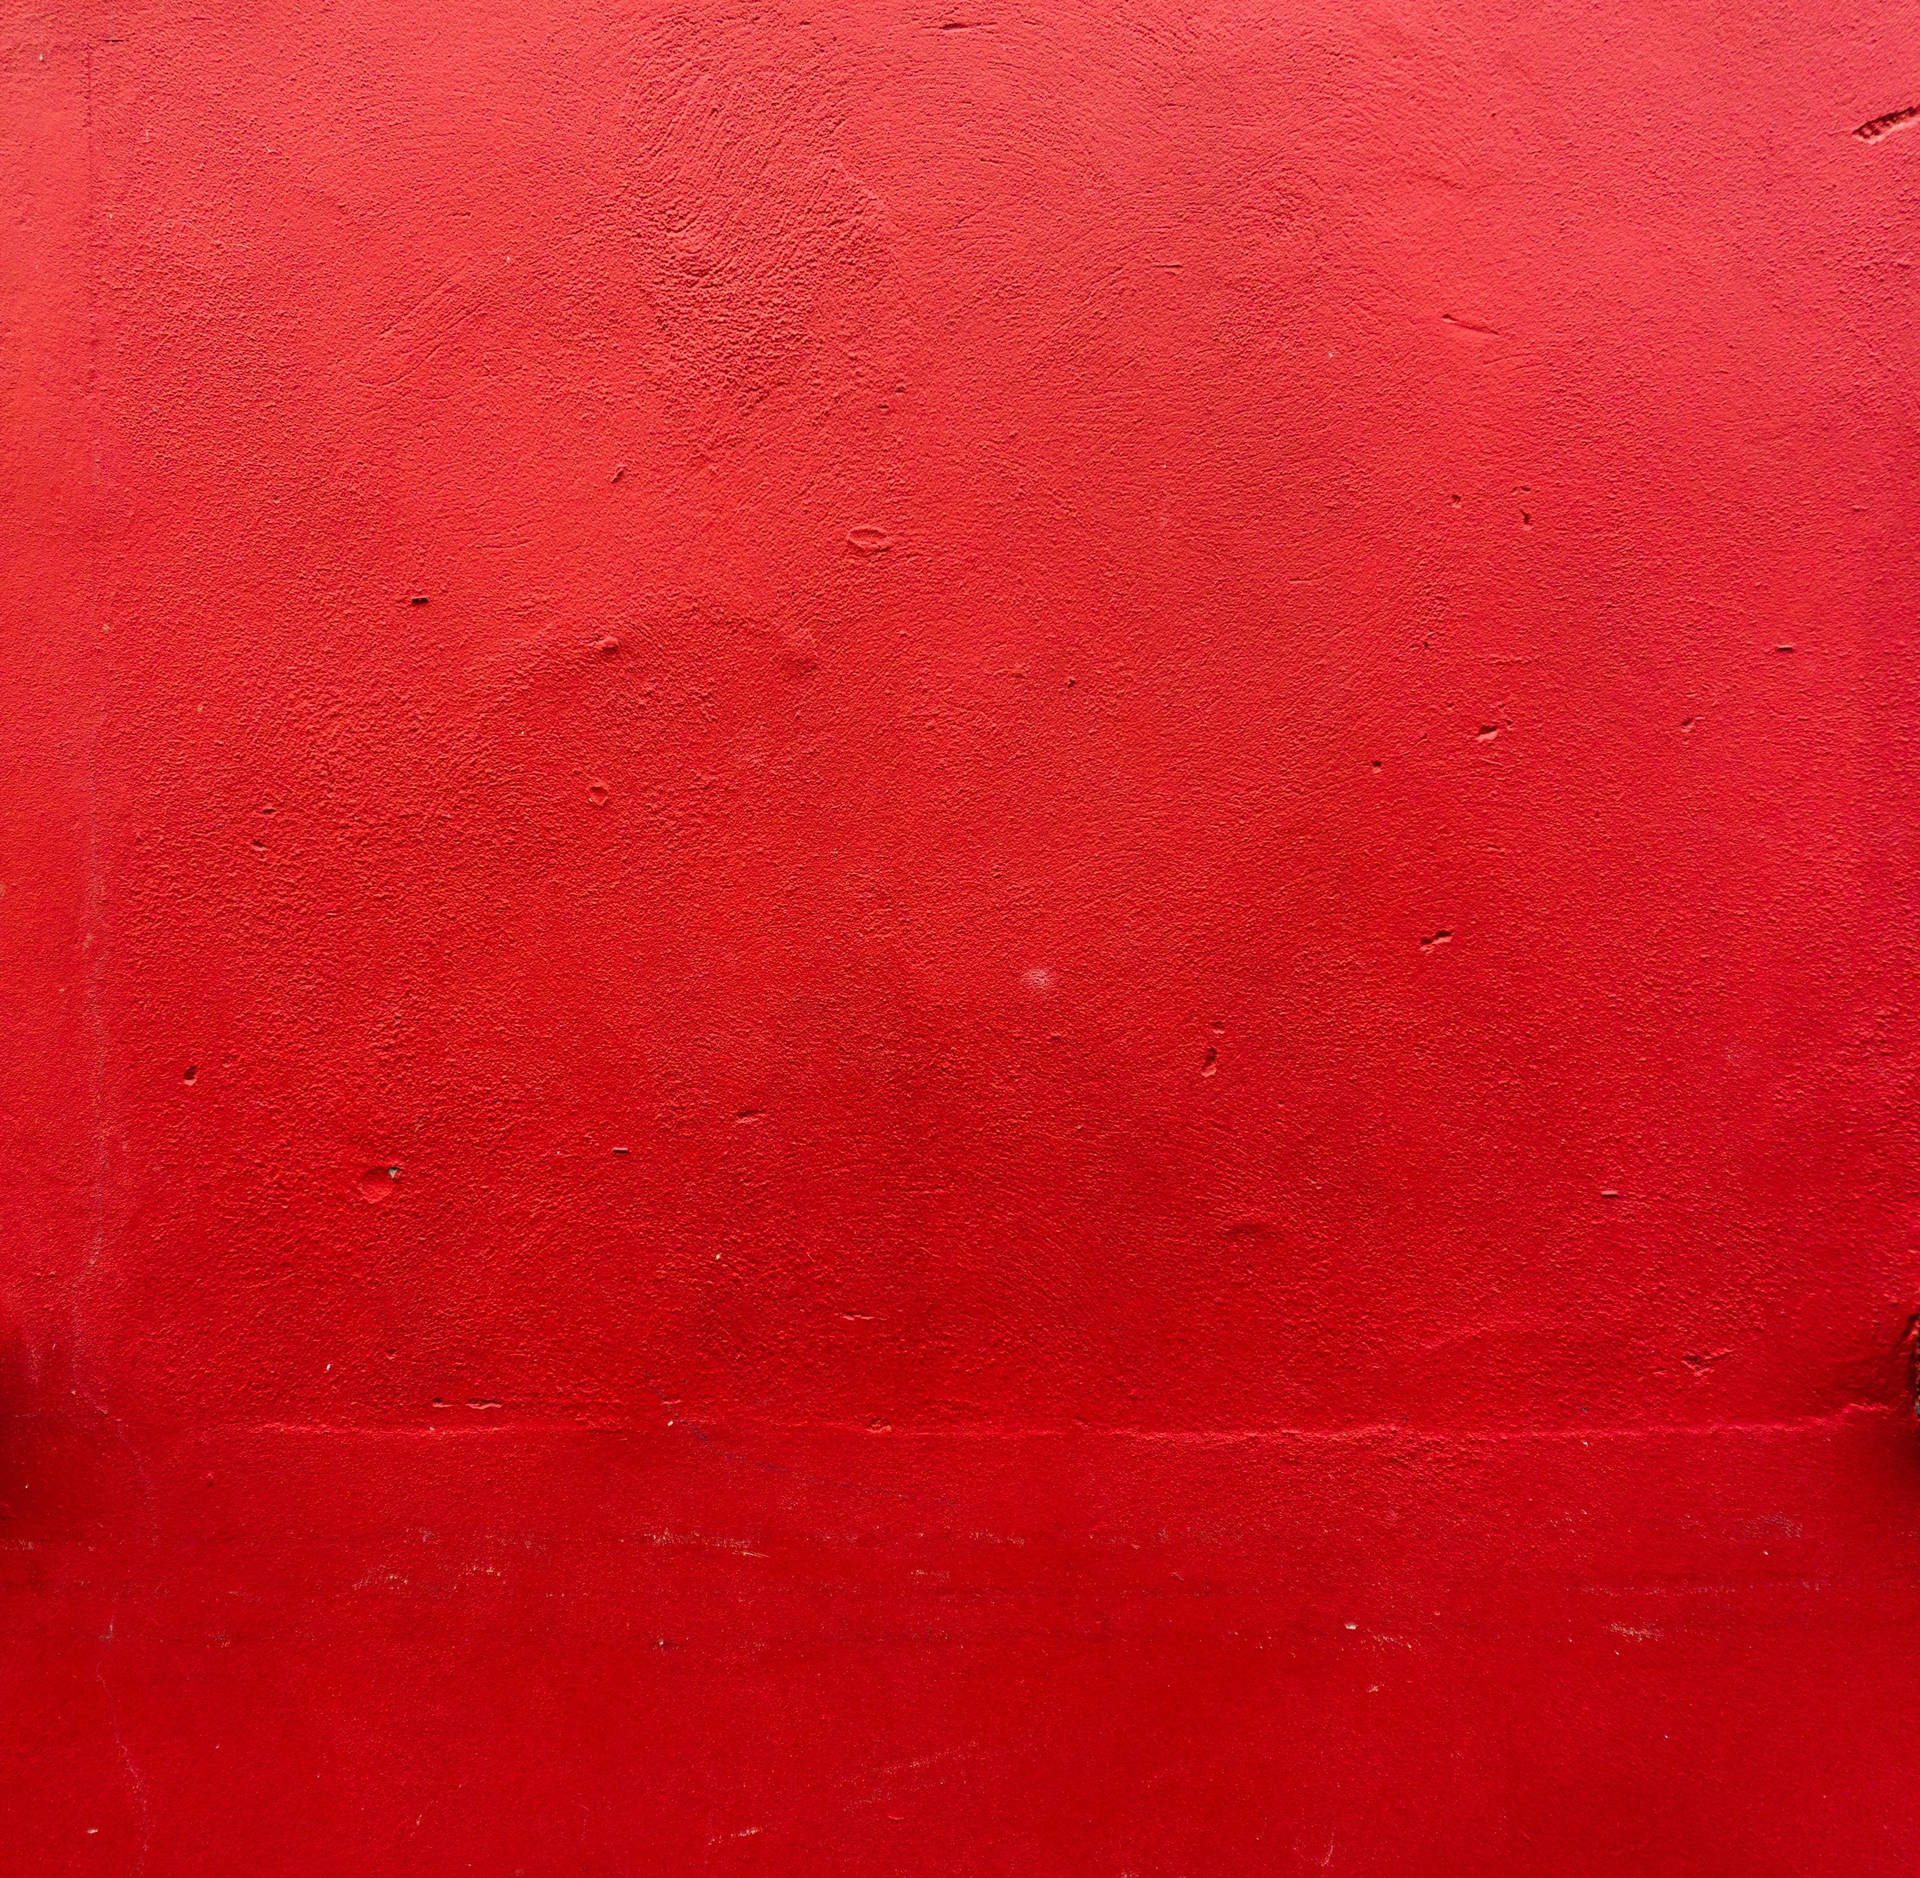 Red Baddie Paint Texture Background